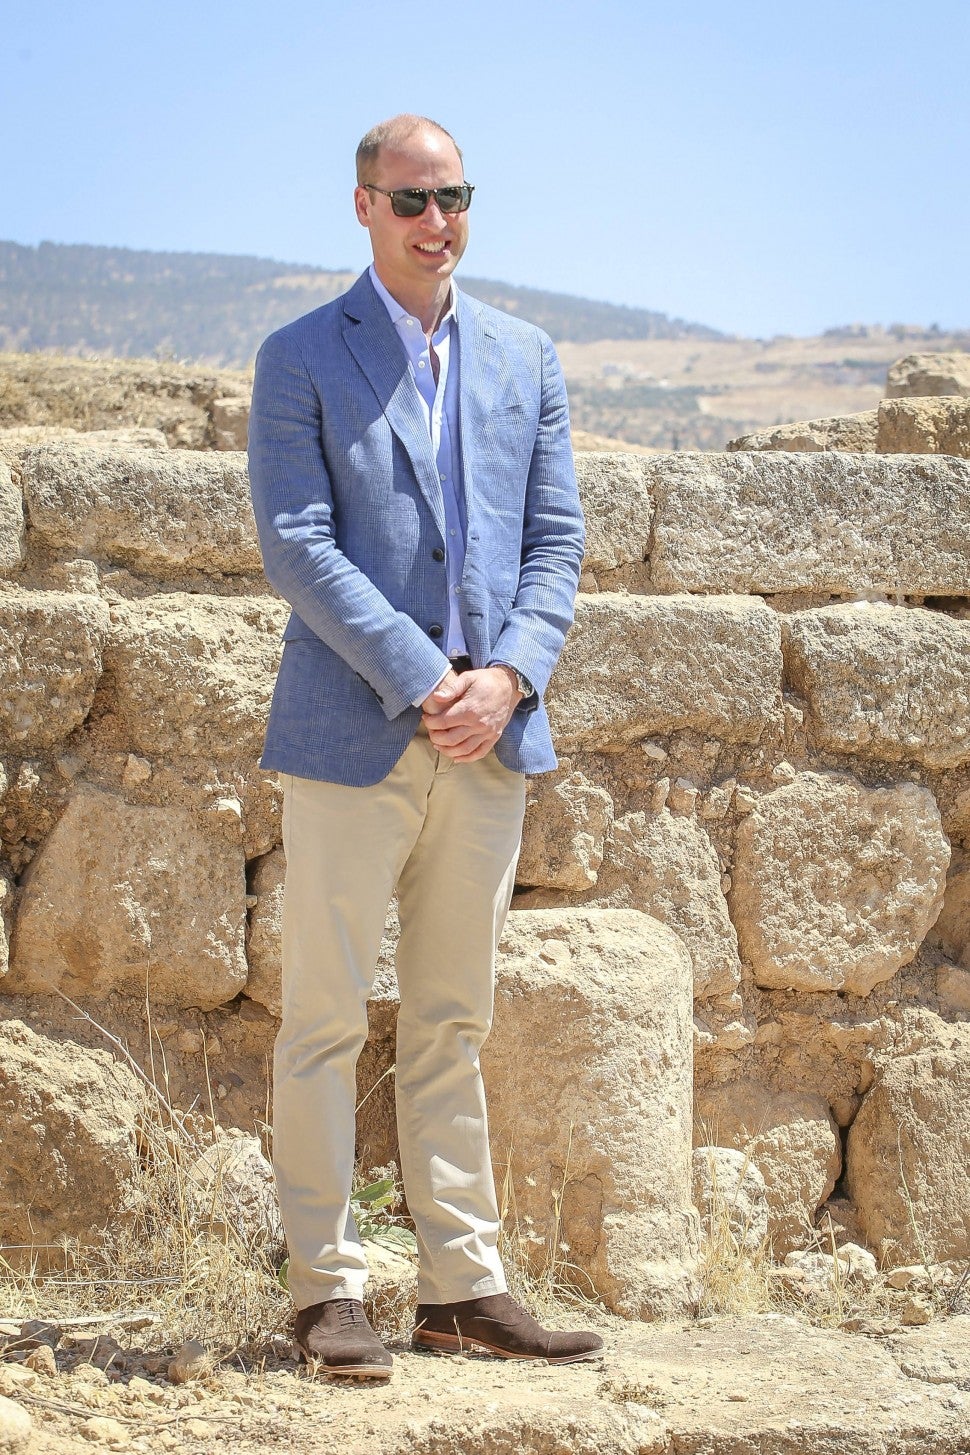 Prince William poses at the same spot at Jerash, Jordan, where Kate Middleton visited as a child.